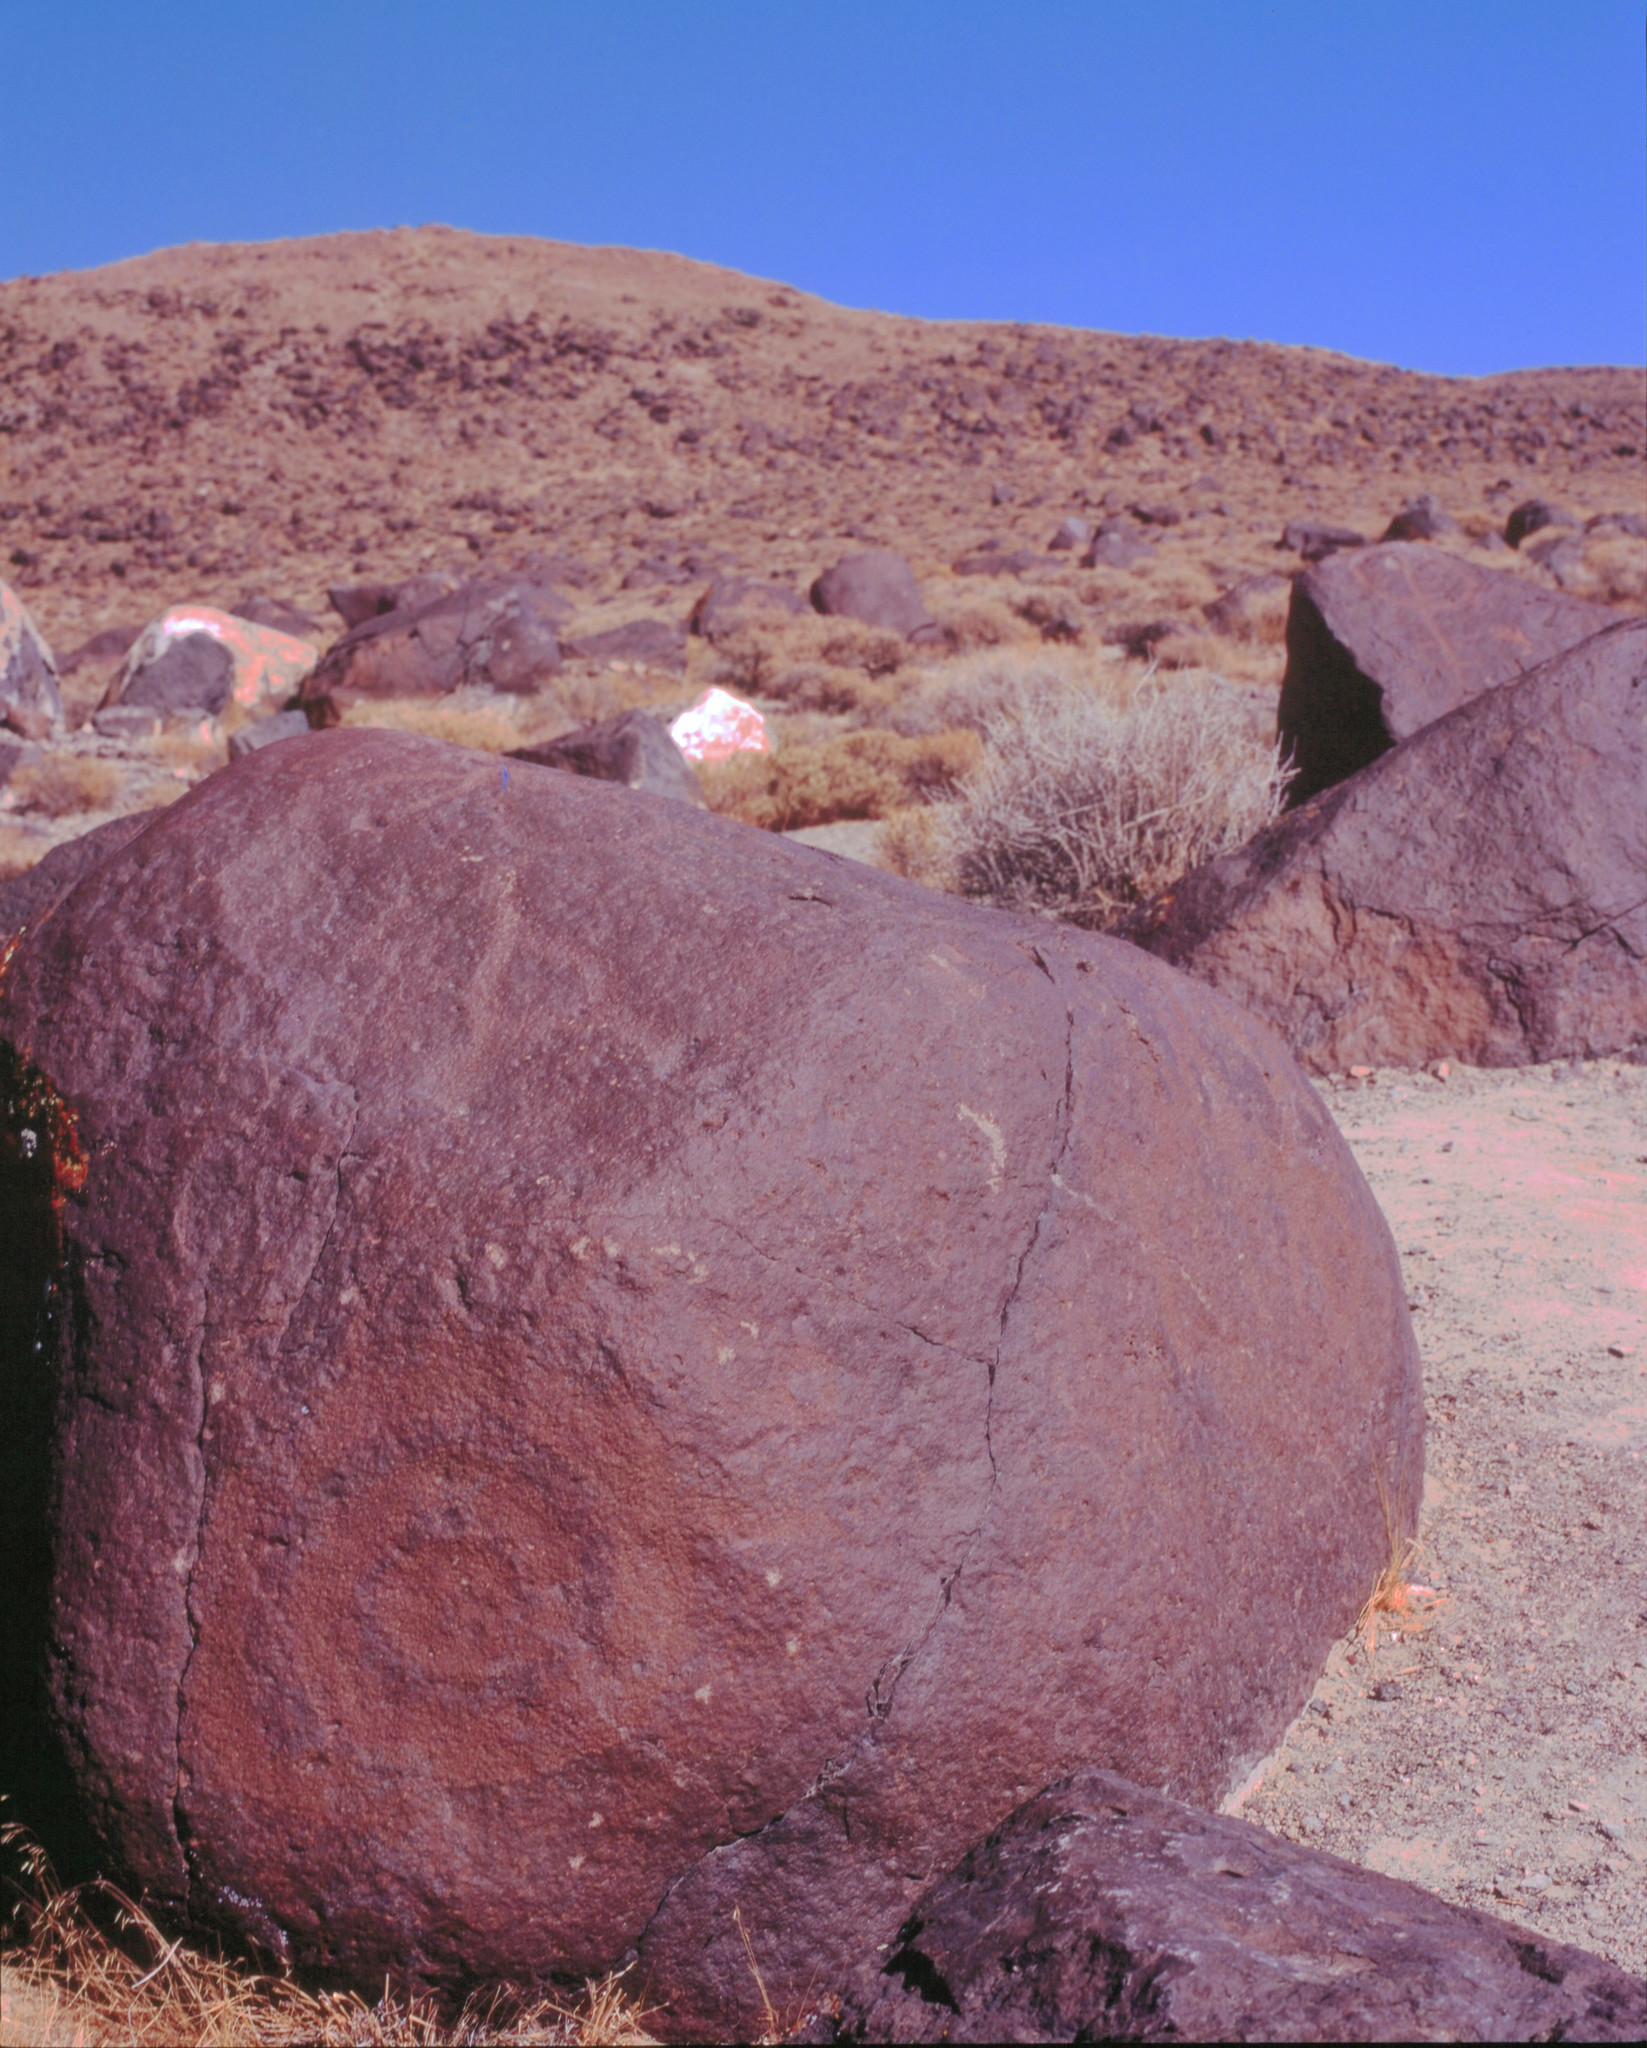 Petroglyph of spiral pattern on reddish rock in the desert